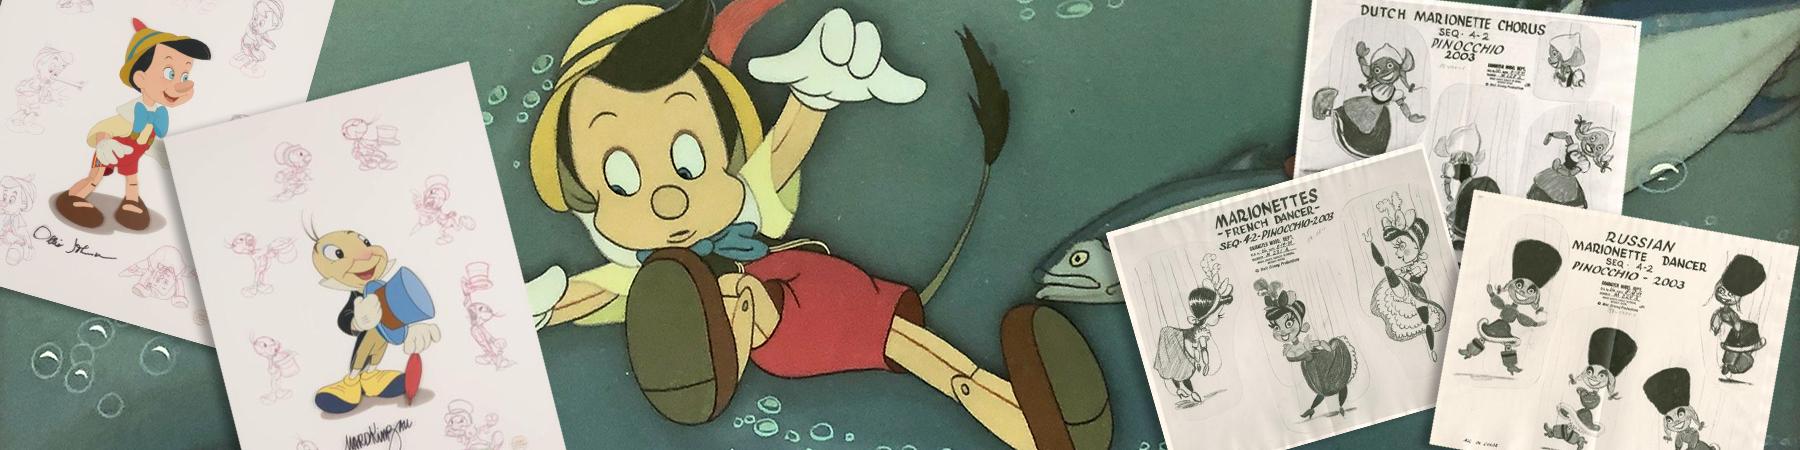 Artwork from Walt Disney's Pinocchio (1940)